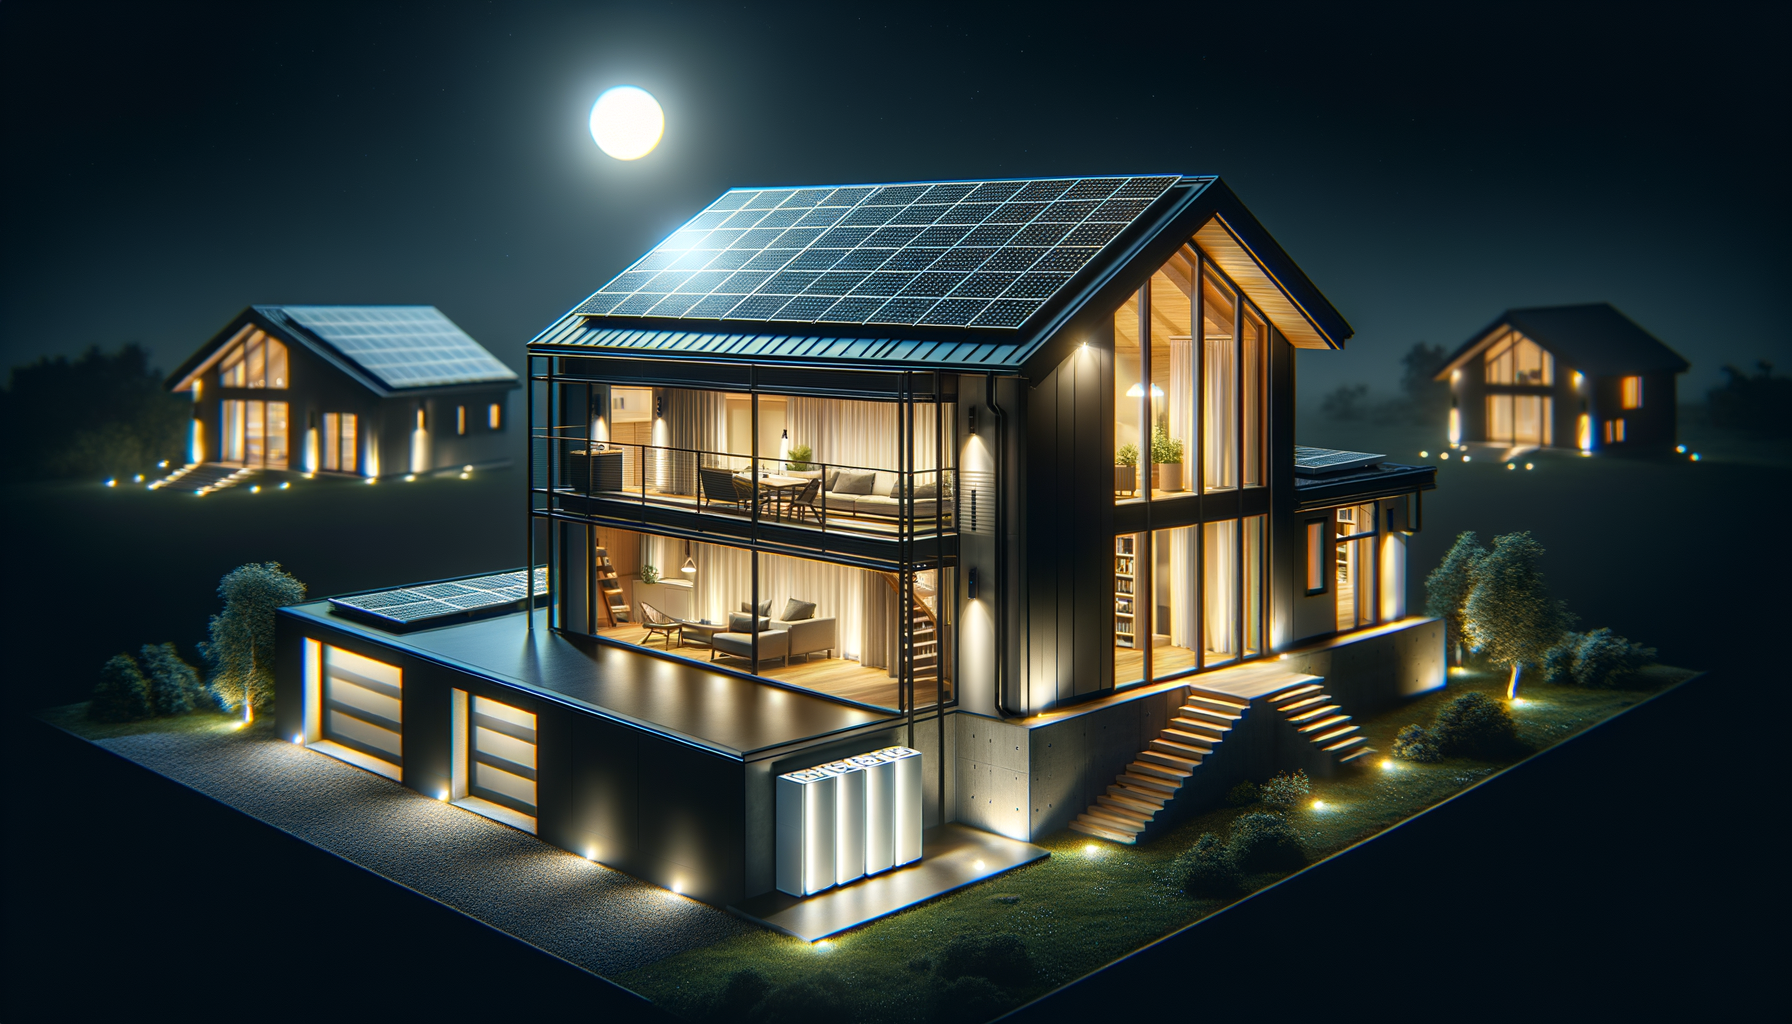 ALT: House lit by solar energy at night